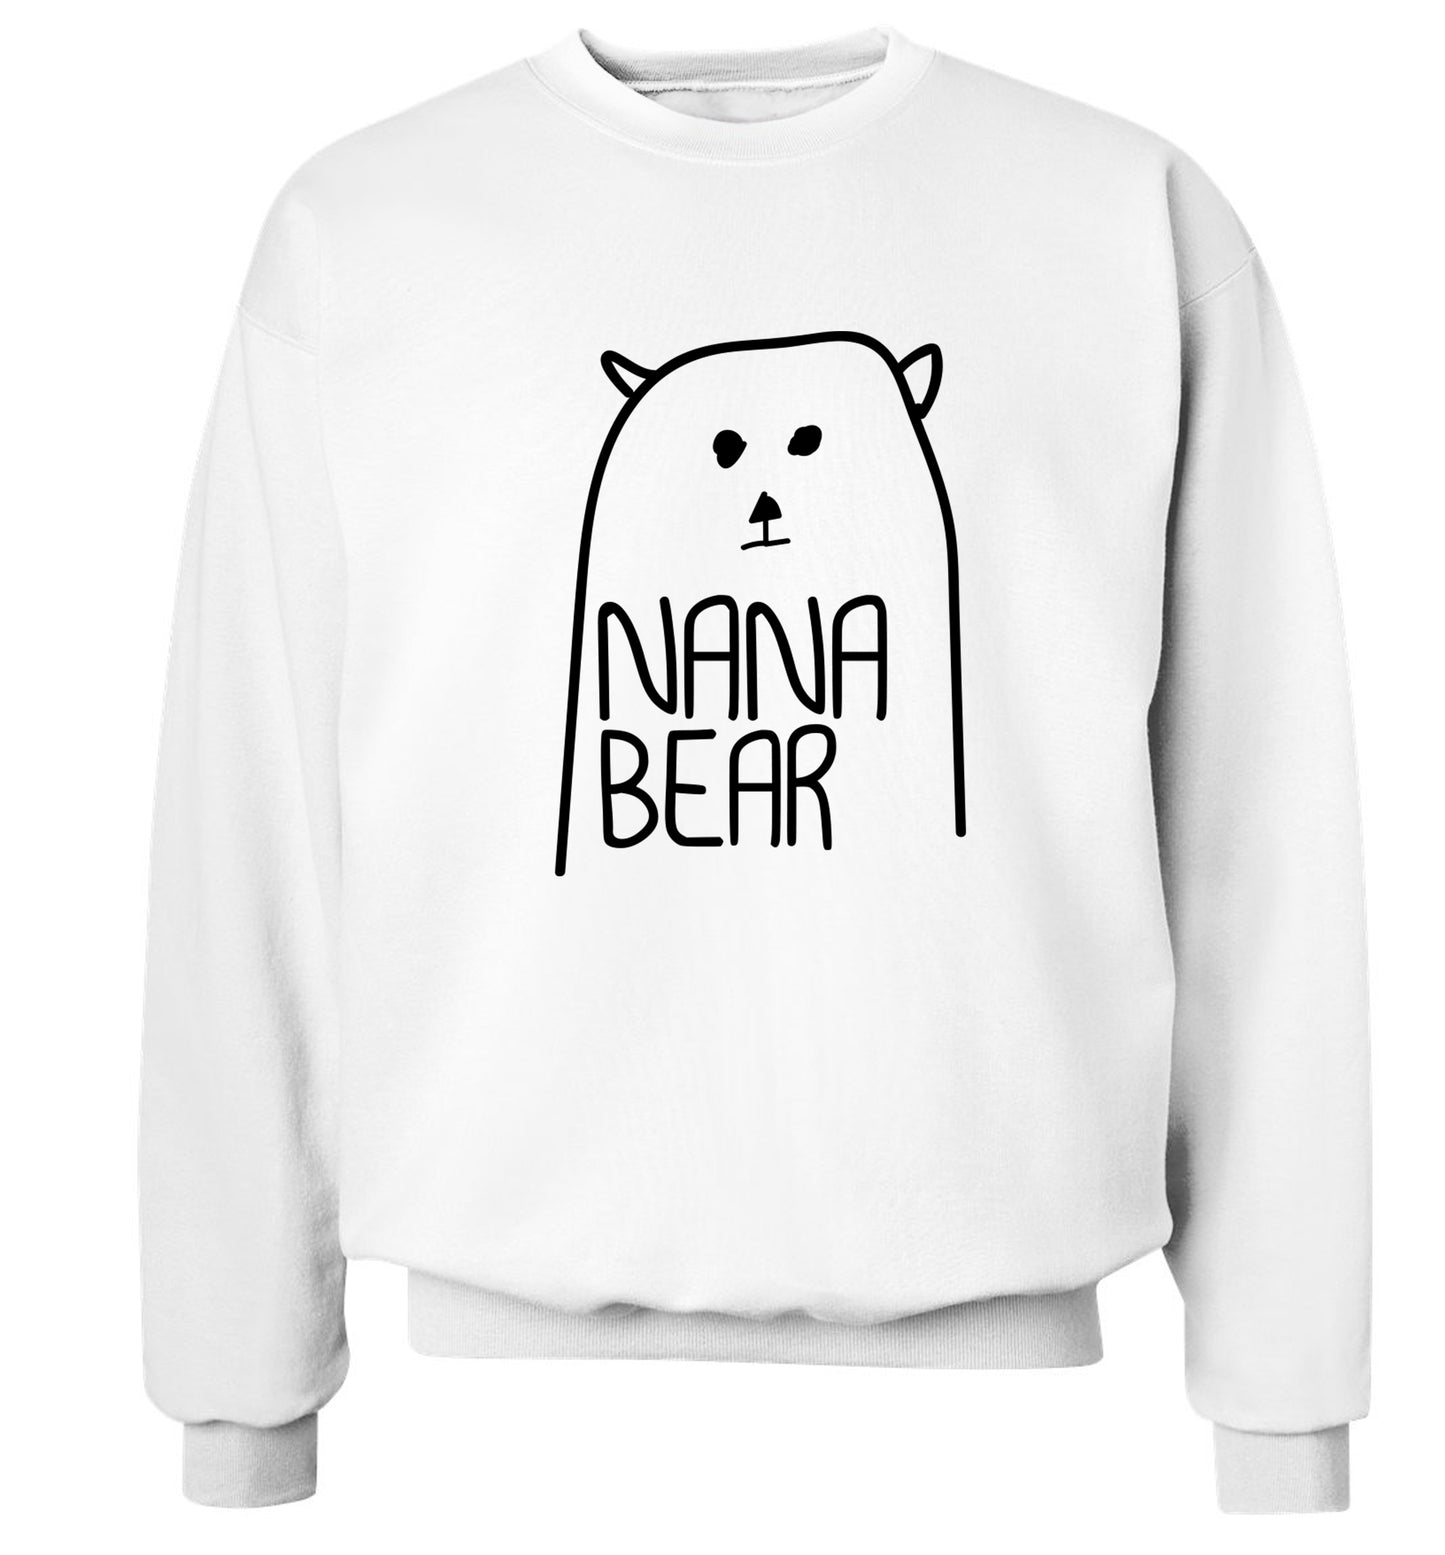 Nana bear Adult's unisex white Sweater 2XL